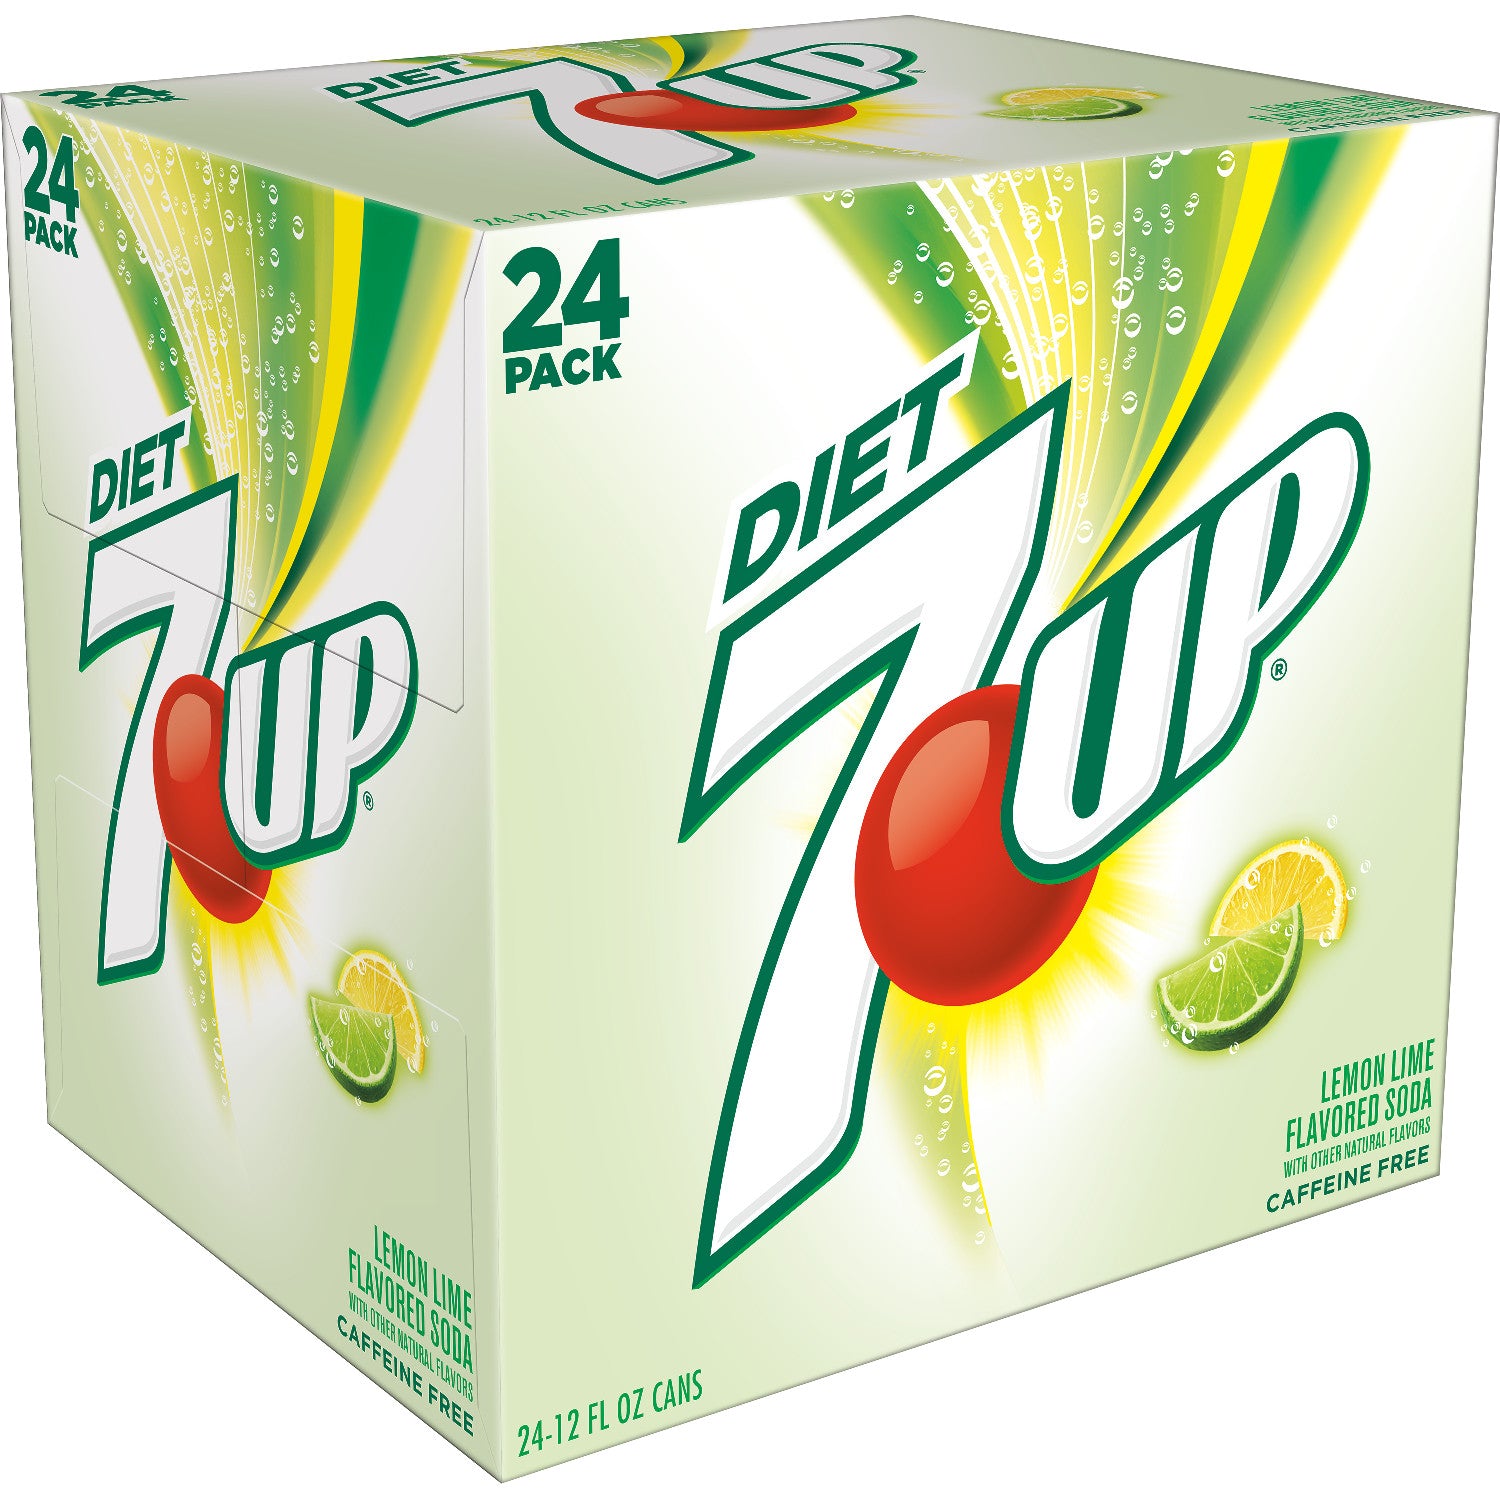 stl>7-Up Diet - 24 Pack